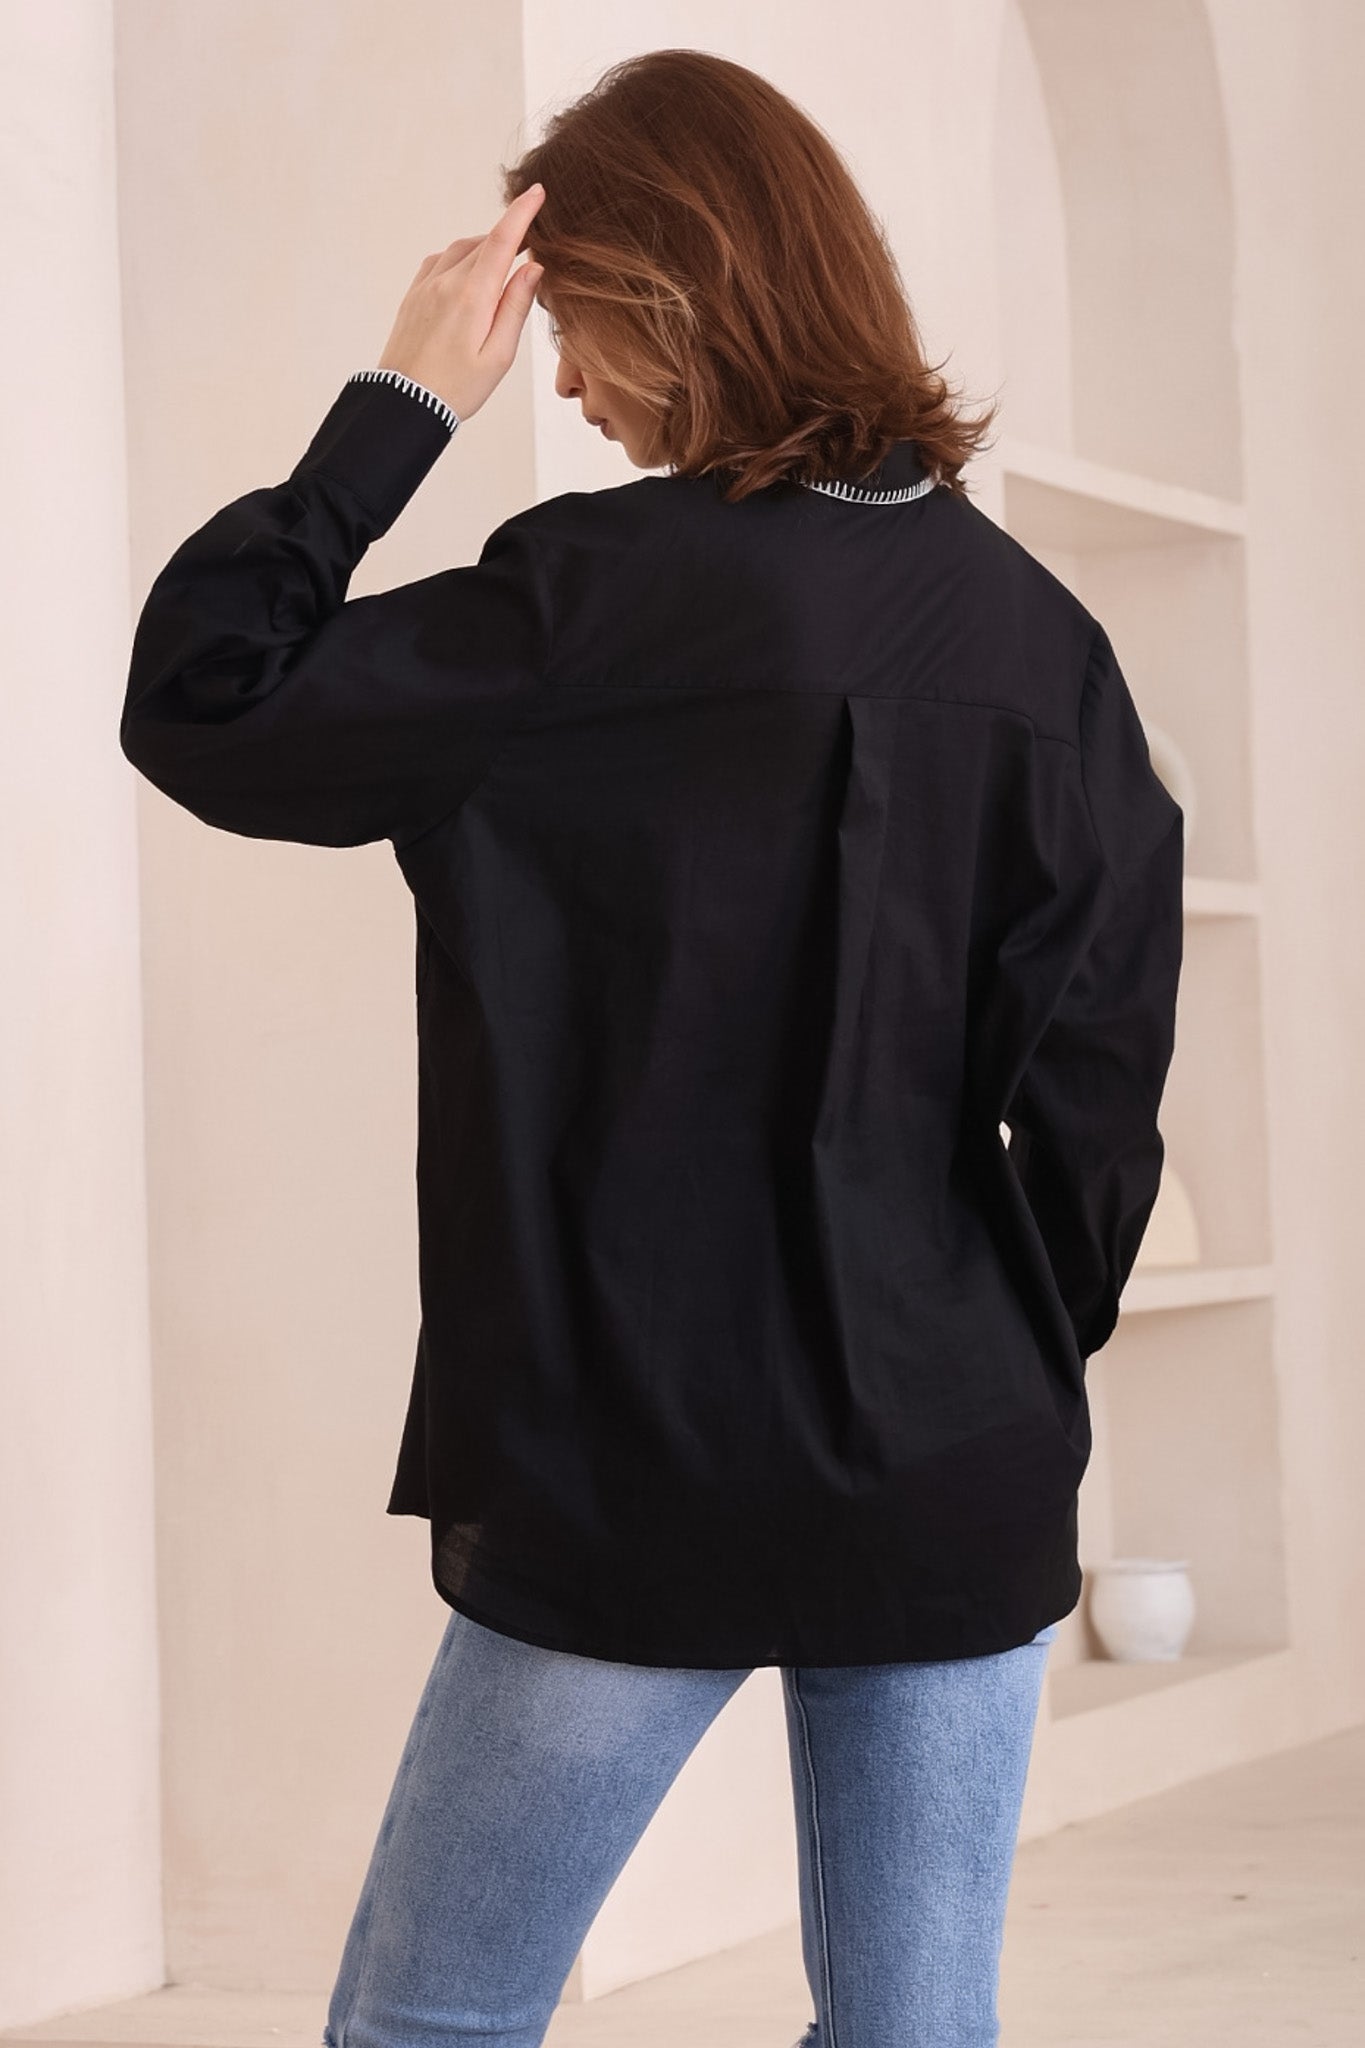 Whistler Shirt - Contrast Stitch Button Down Shirt in Black